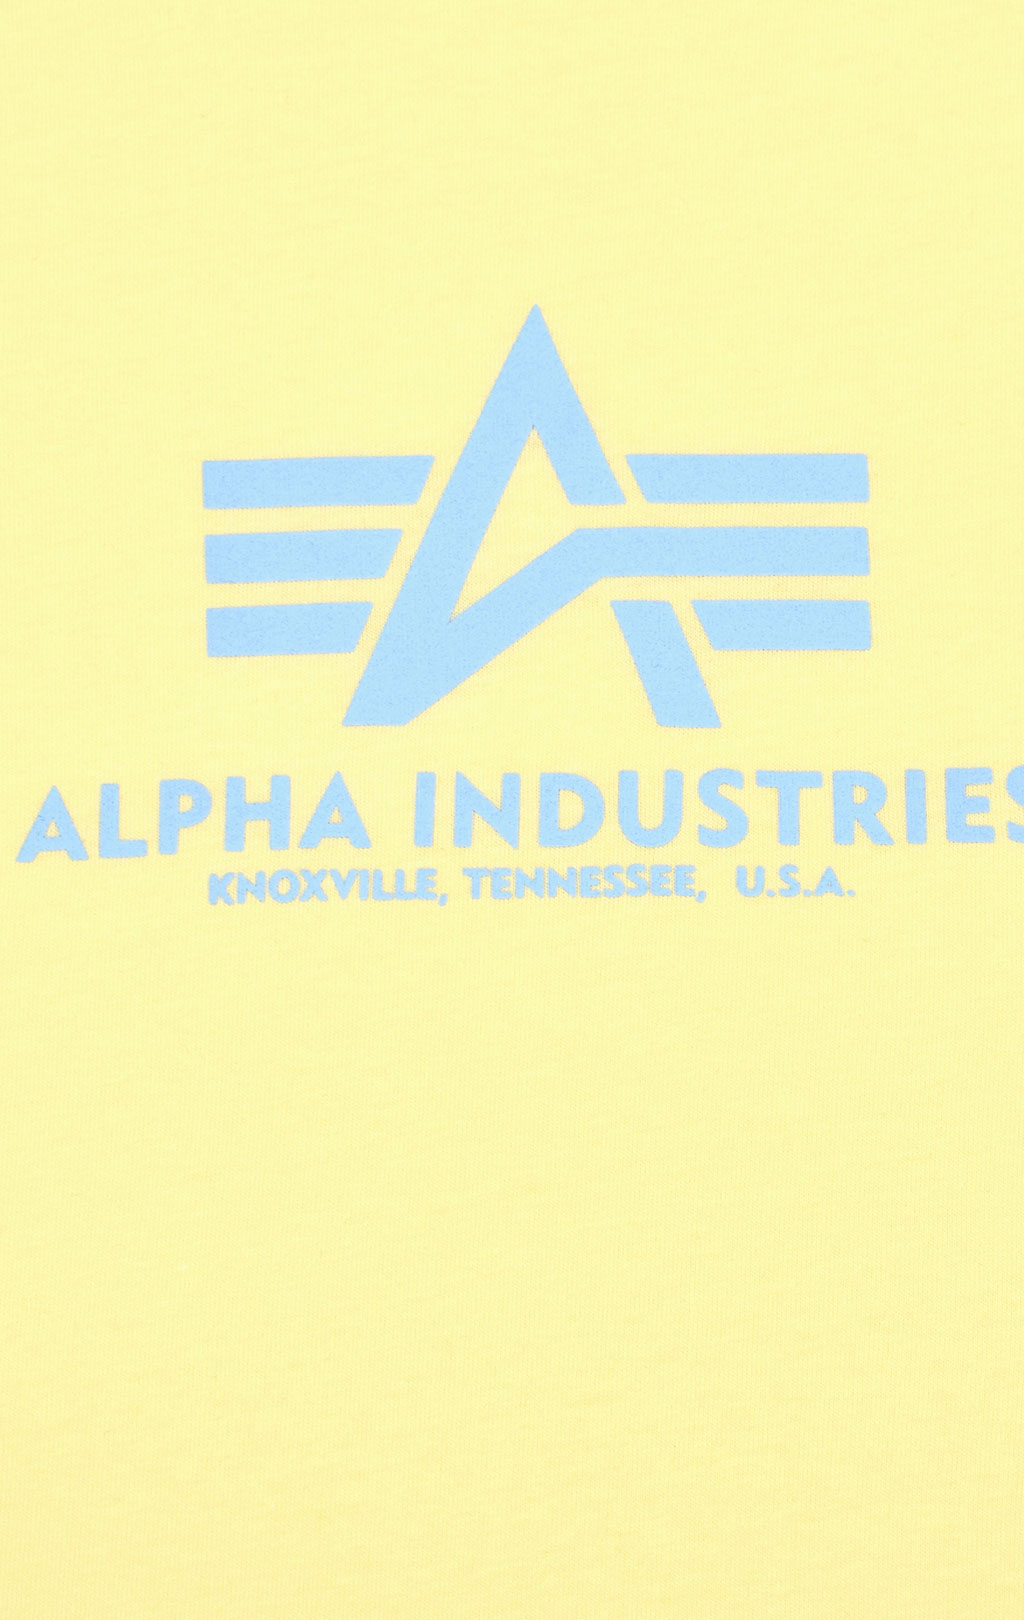 Женская футболка ALPHA INDUSTRIES NEW BASIC T pastel yellow 